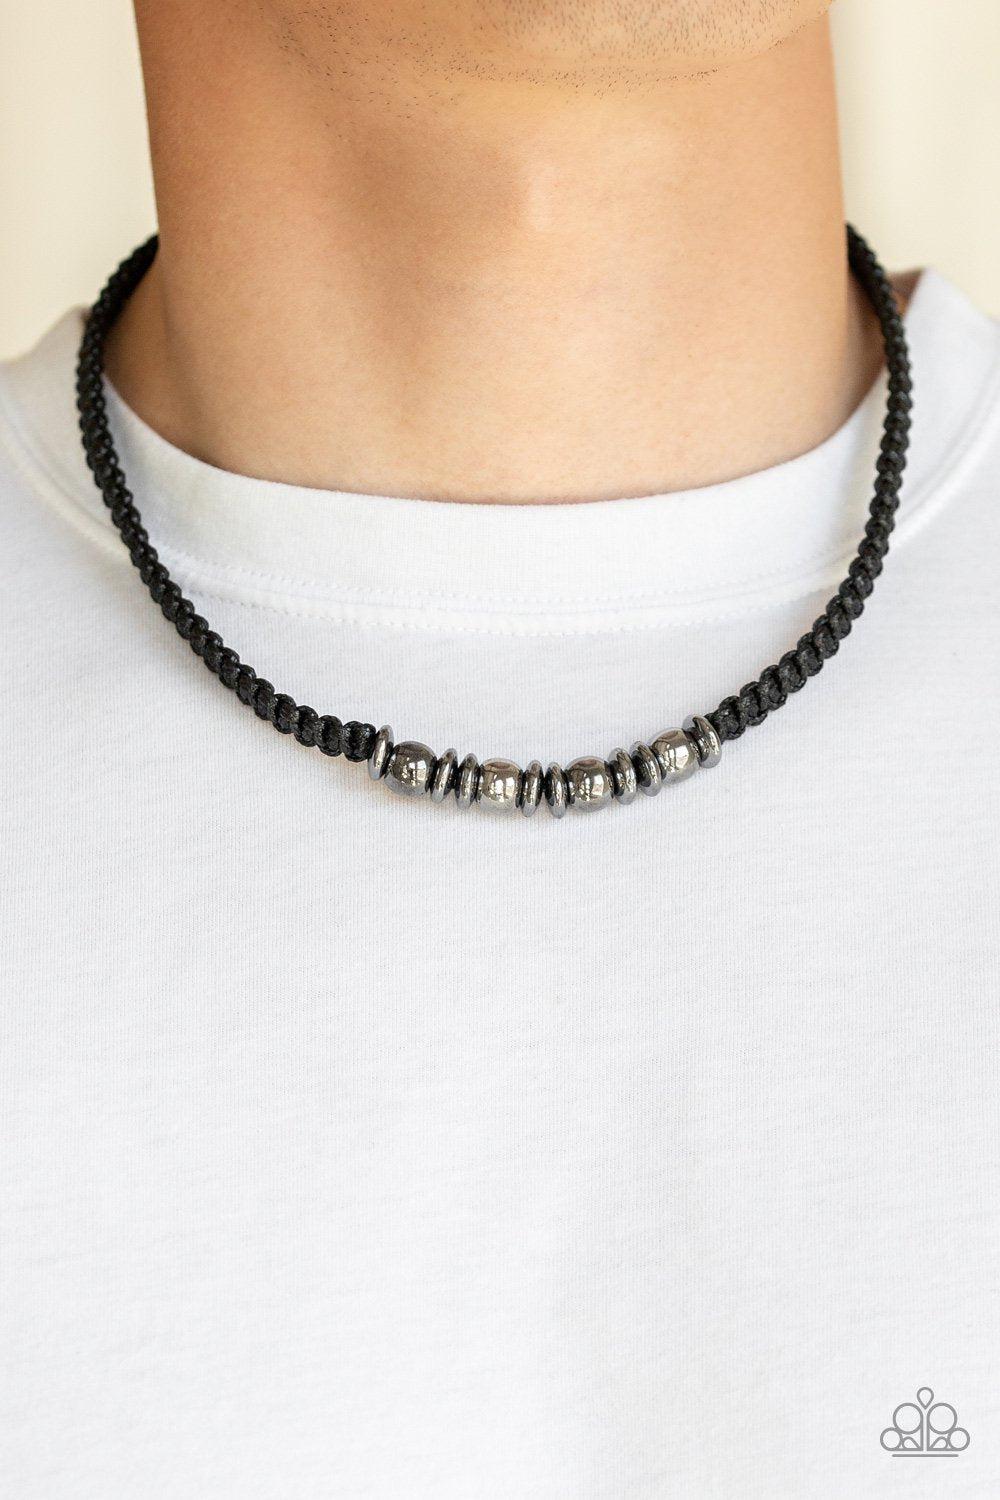 Metal Mechanics Black Urban Necklace - Paparazzi Accessories - lightbox -CarasShop.com - $5 Jewelry by Cara Jewels